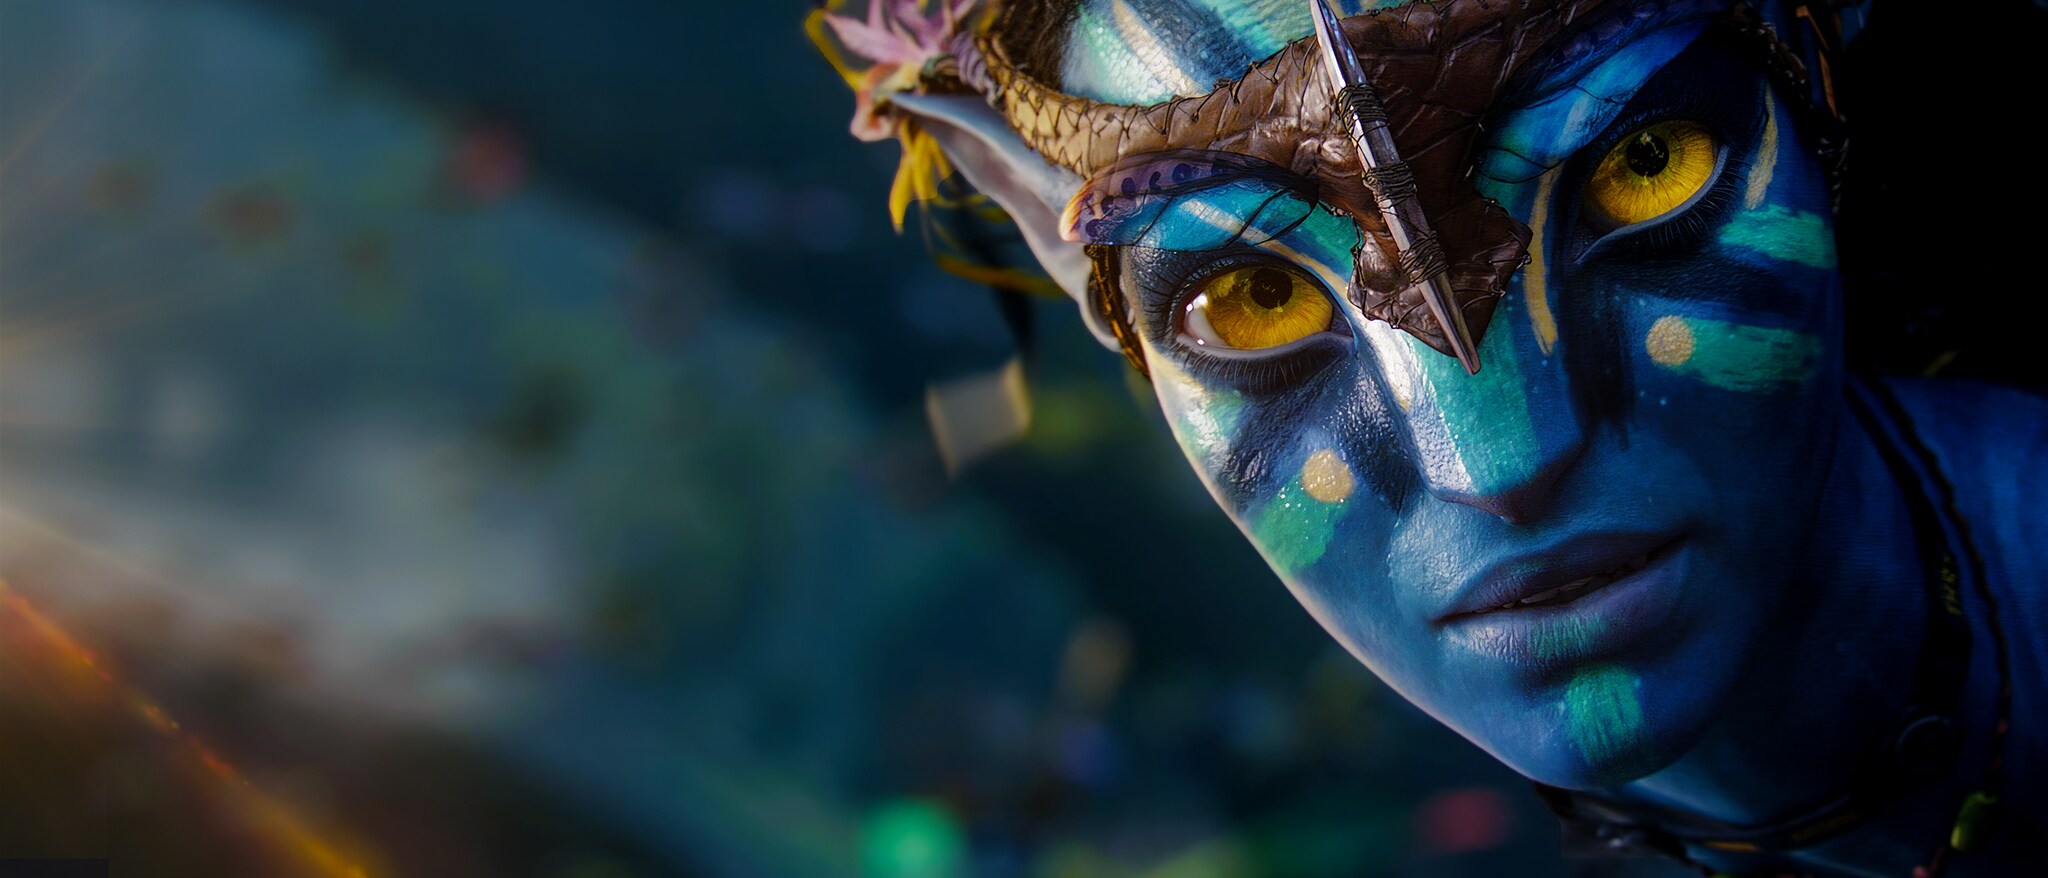 Avatar 1 Re-Release Tickets